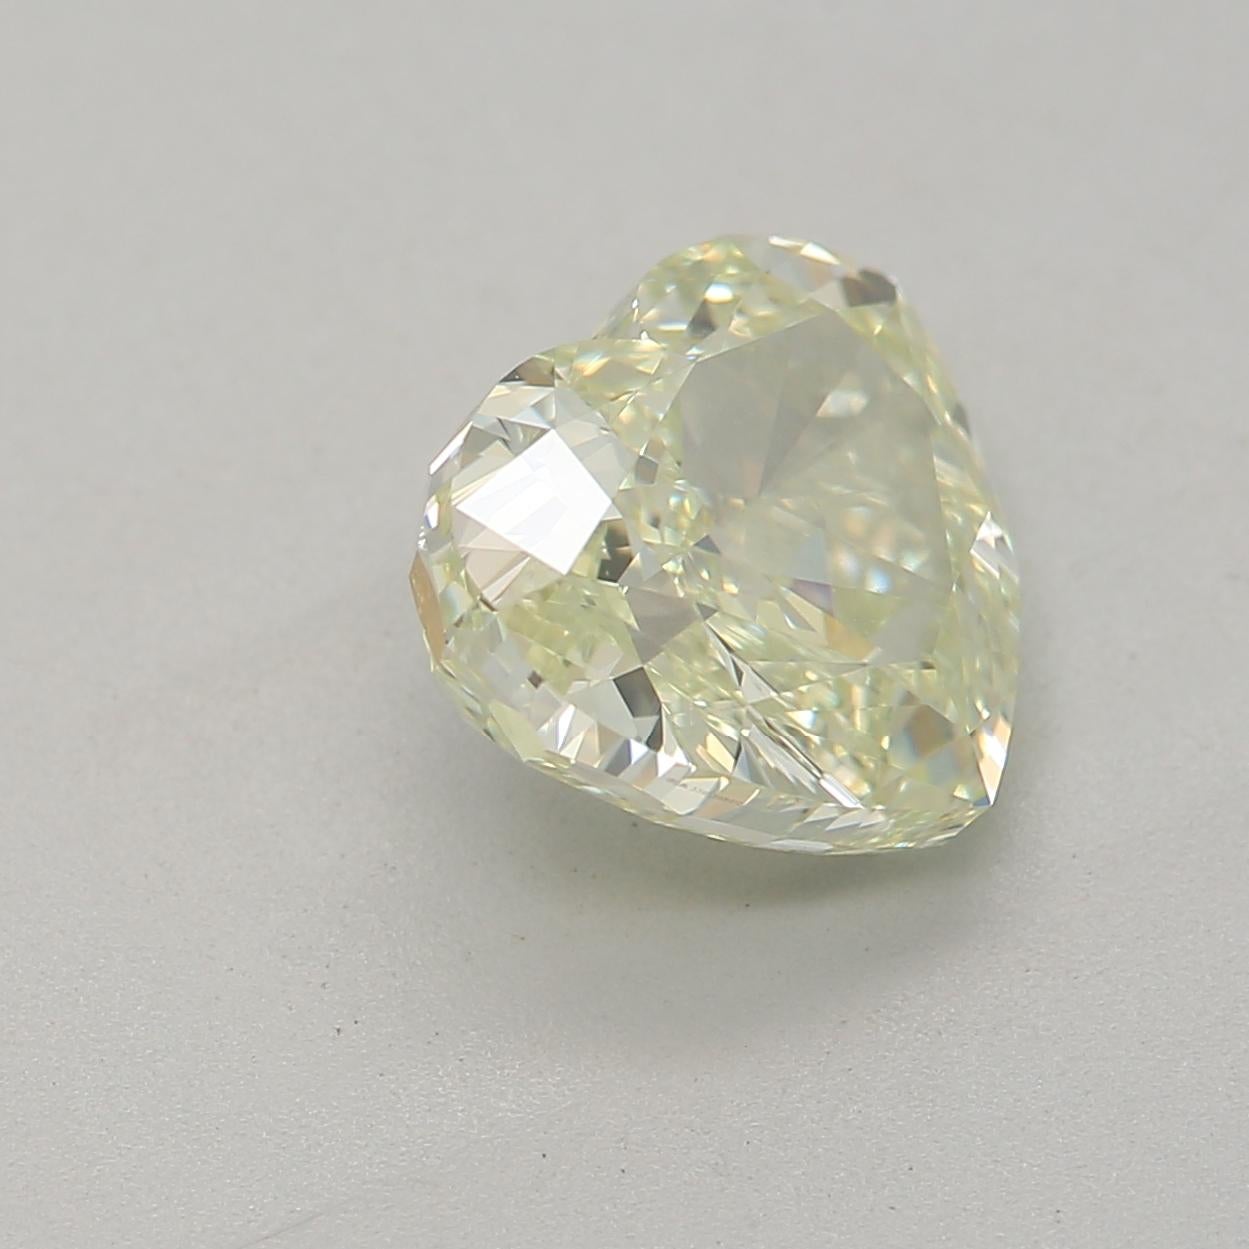 1.51 Carat Fancy Light Green Yellow Heart Cut Diamond VS1 Clarity GIA Certified For Sale 1